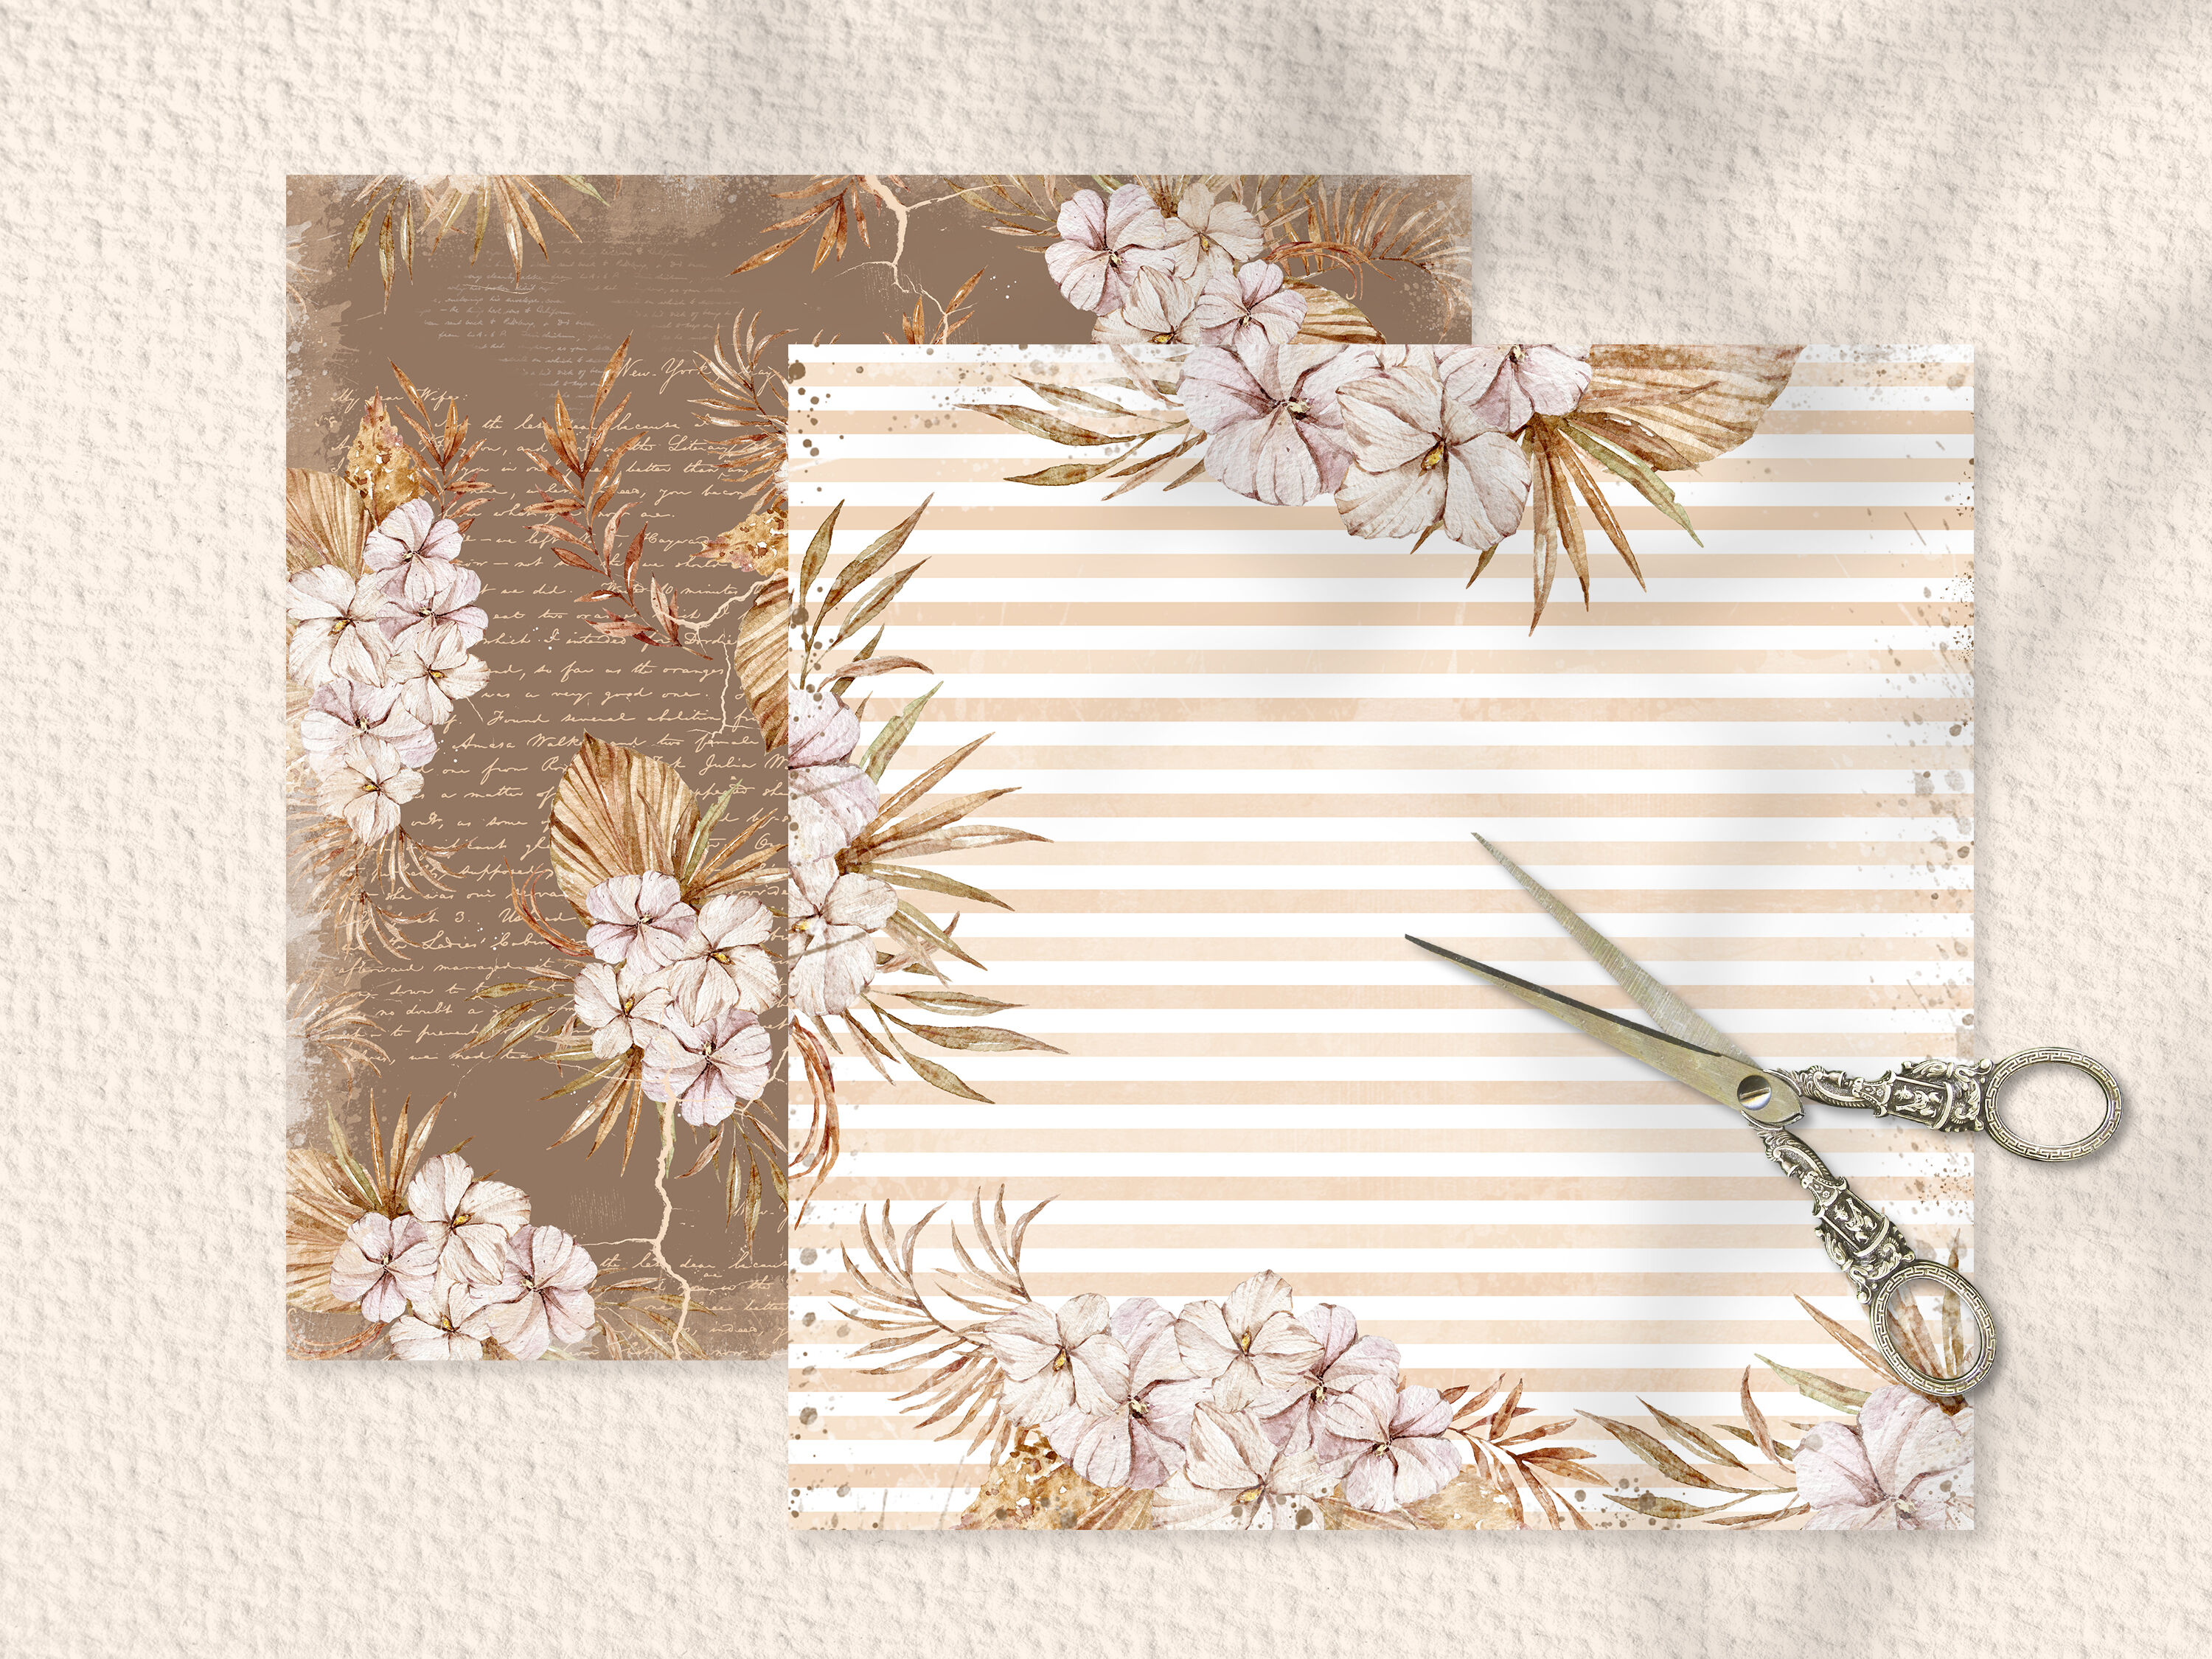 Boho floral scrapbook paper - digital paper - 12 JPEG files By